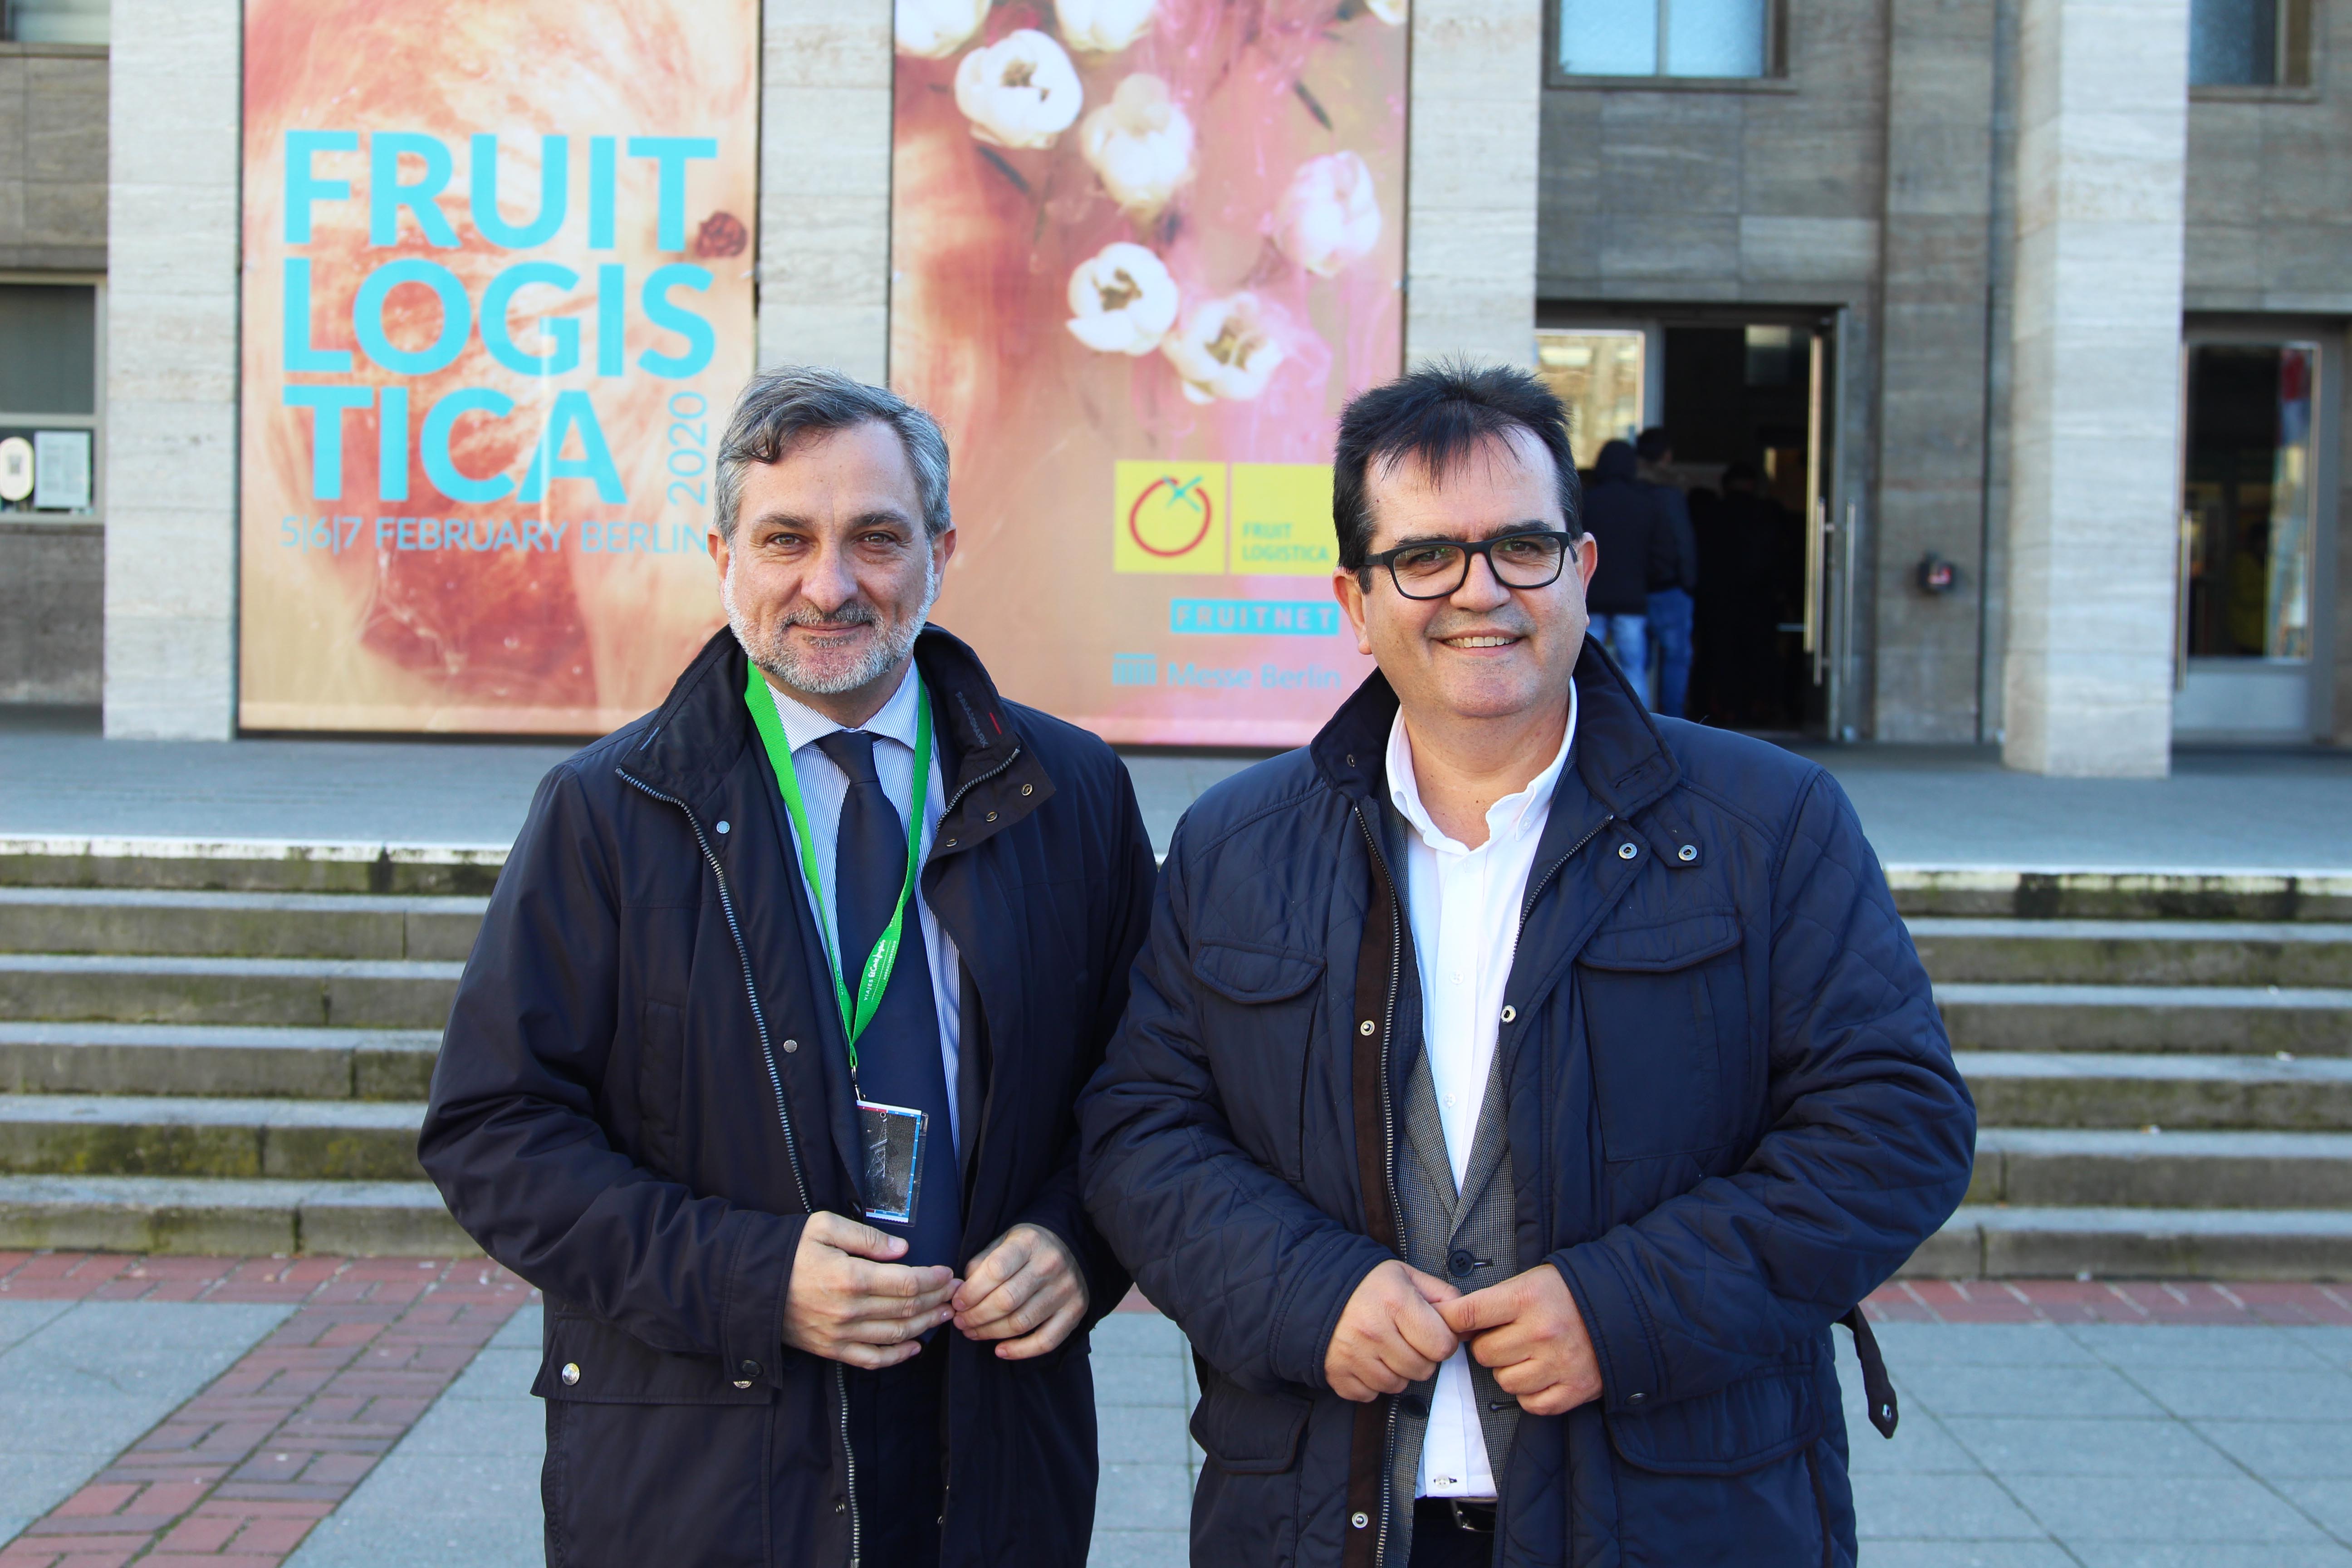 I Jornada de Sabores Almería en Fruit Logistica 2020